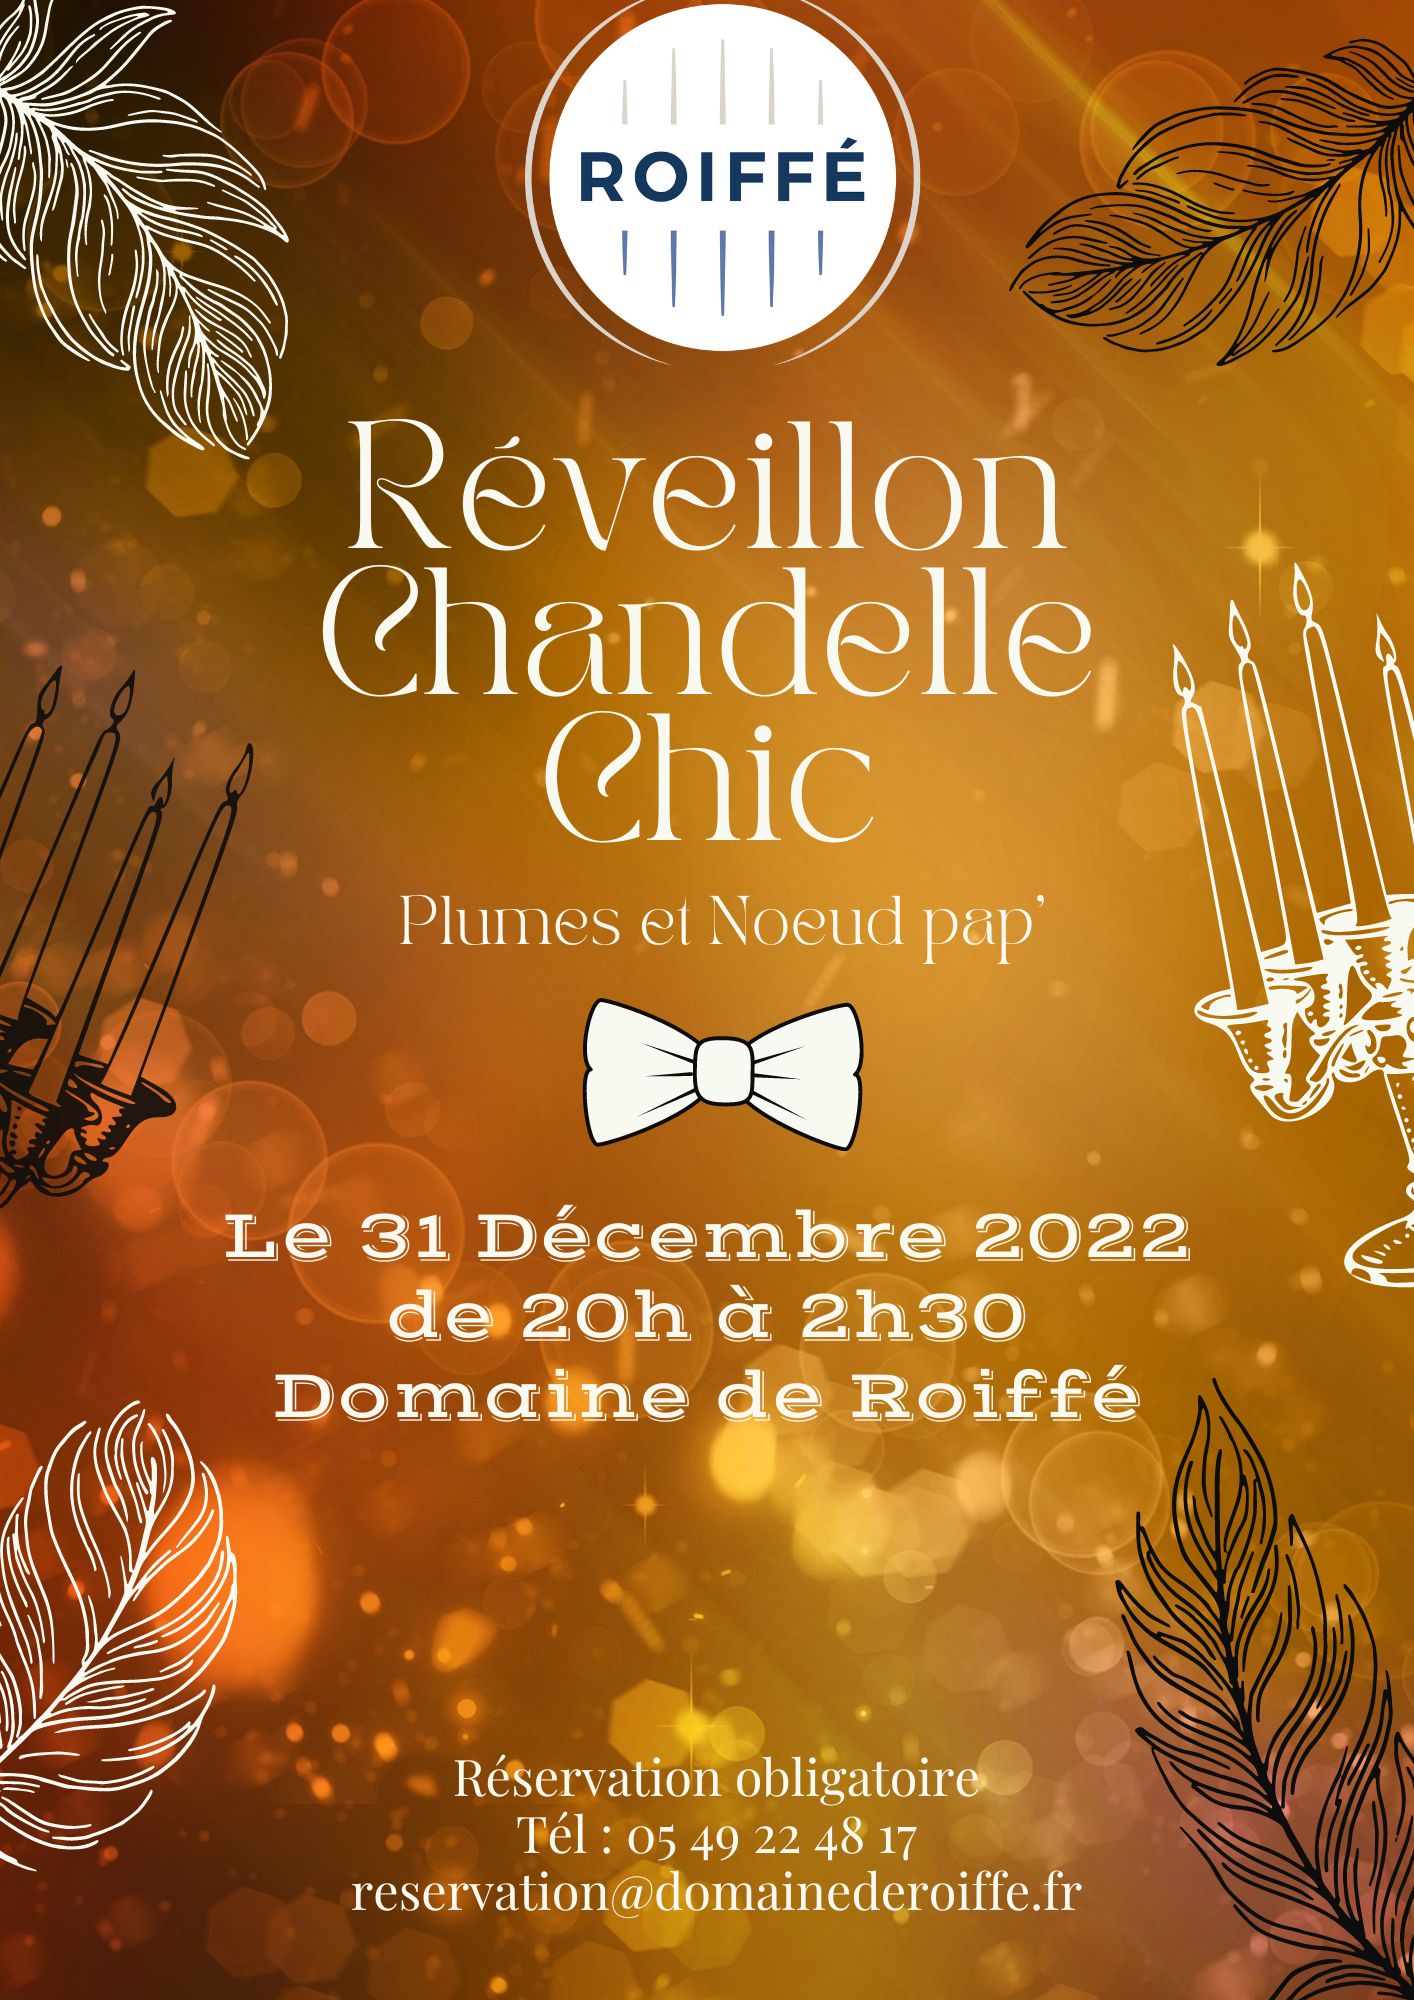 New Year at the Domaine de Roiffé